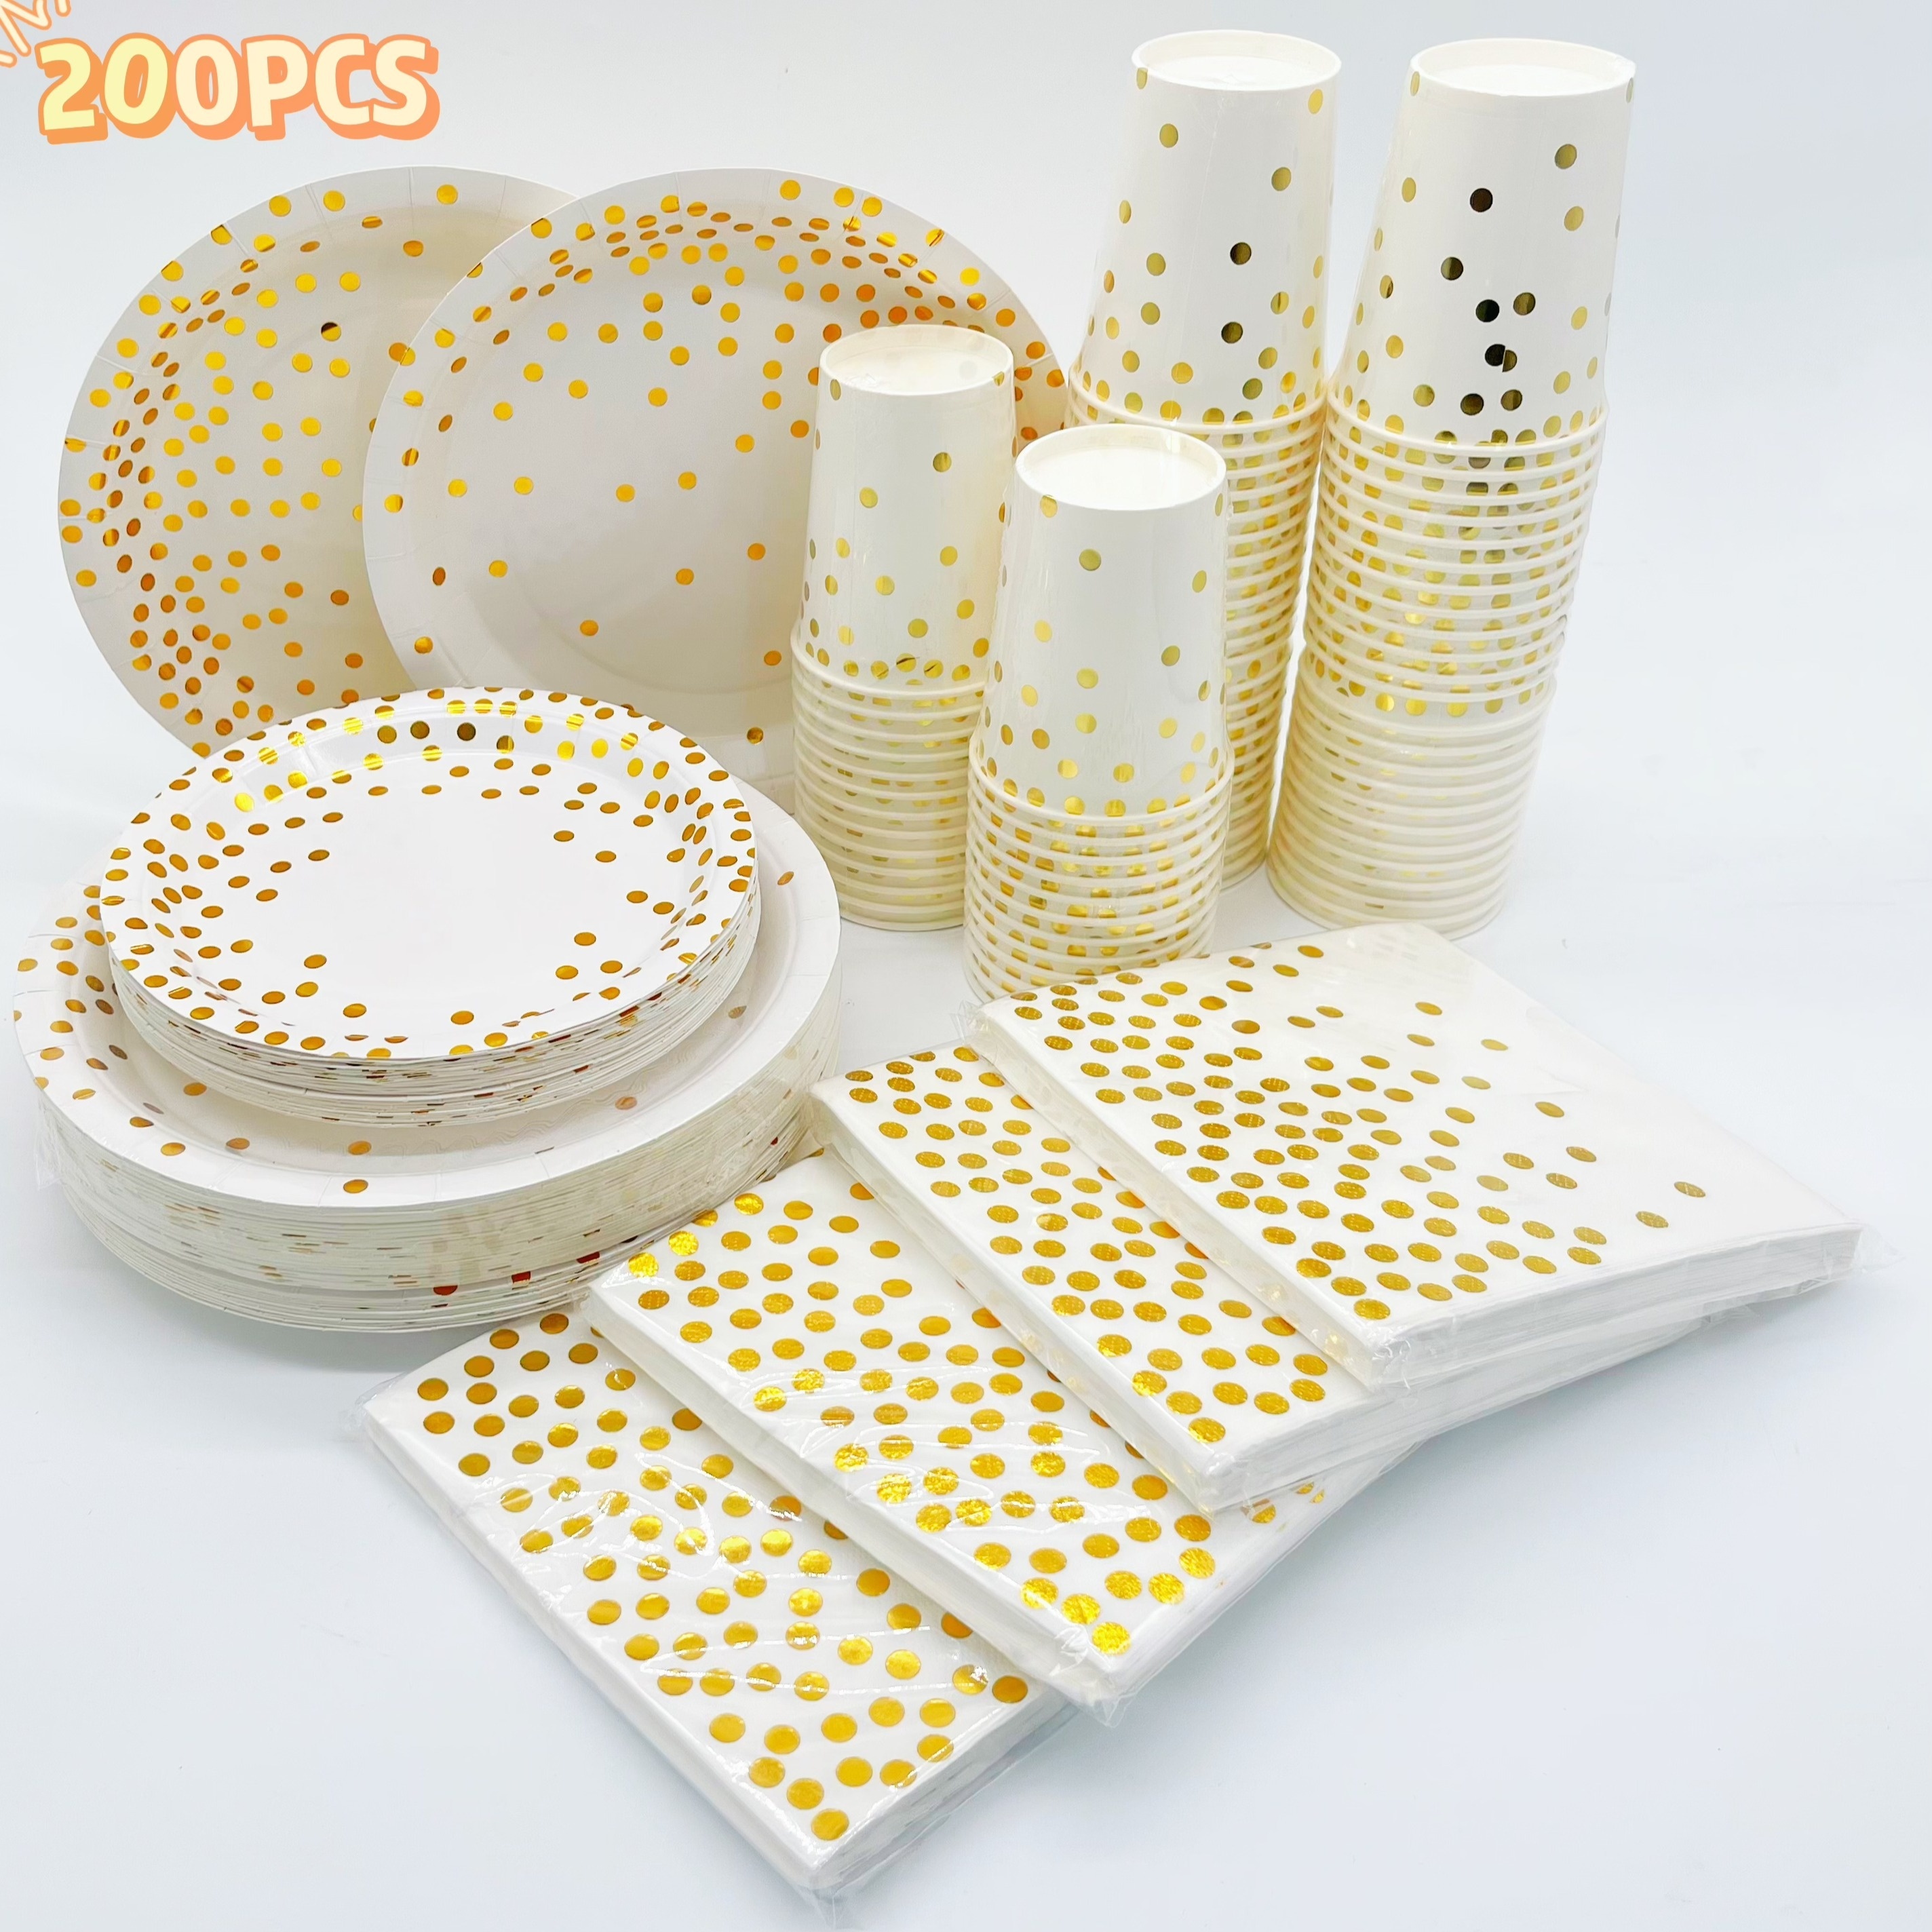 50 PCS Disposable White Uncoated Paper Plates - 5/6/7/8/9 Inch Large  Decorative Craft Paper Plates, Dessert Appetizer Wedding Plates